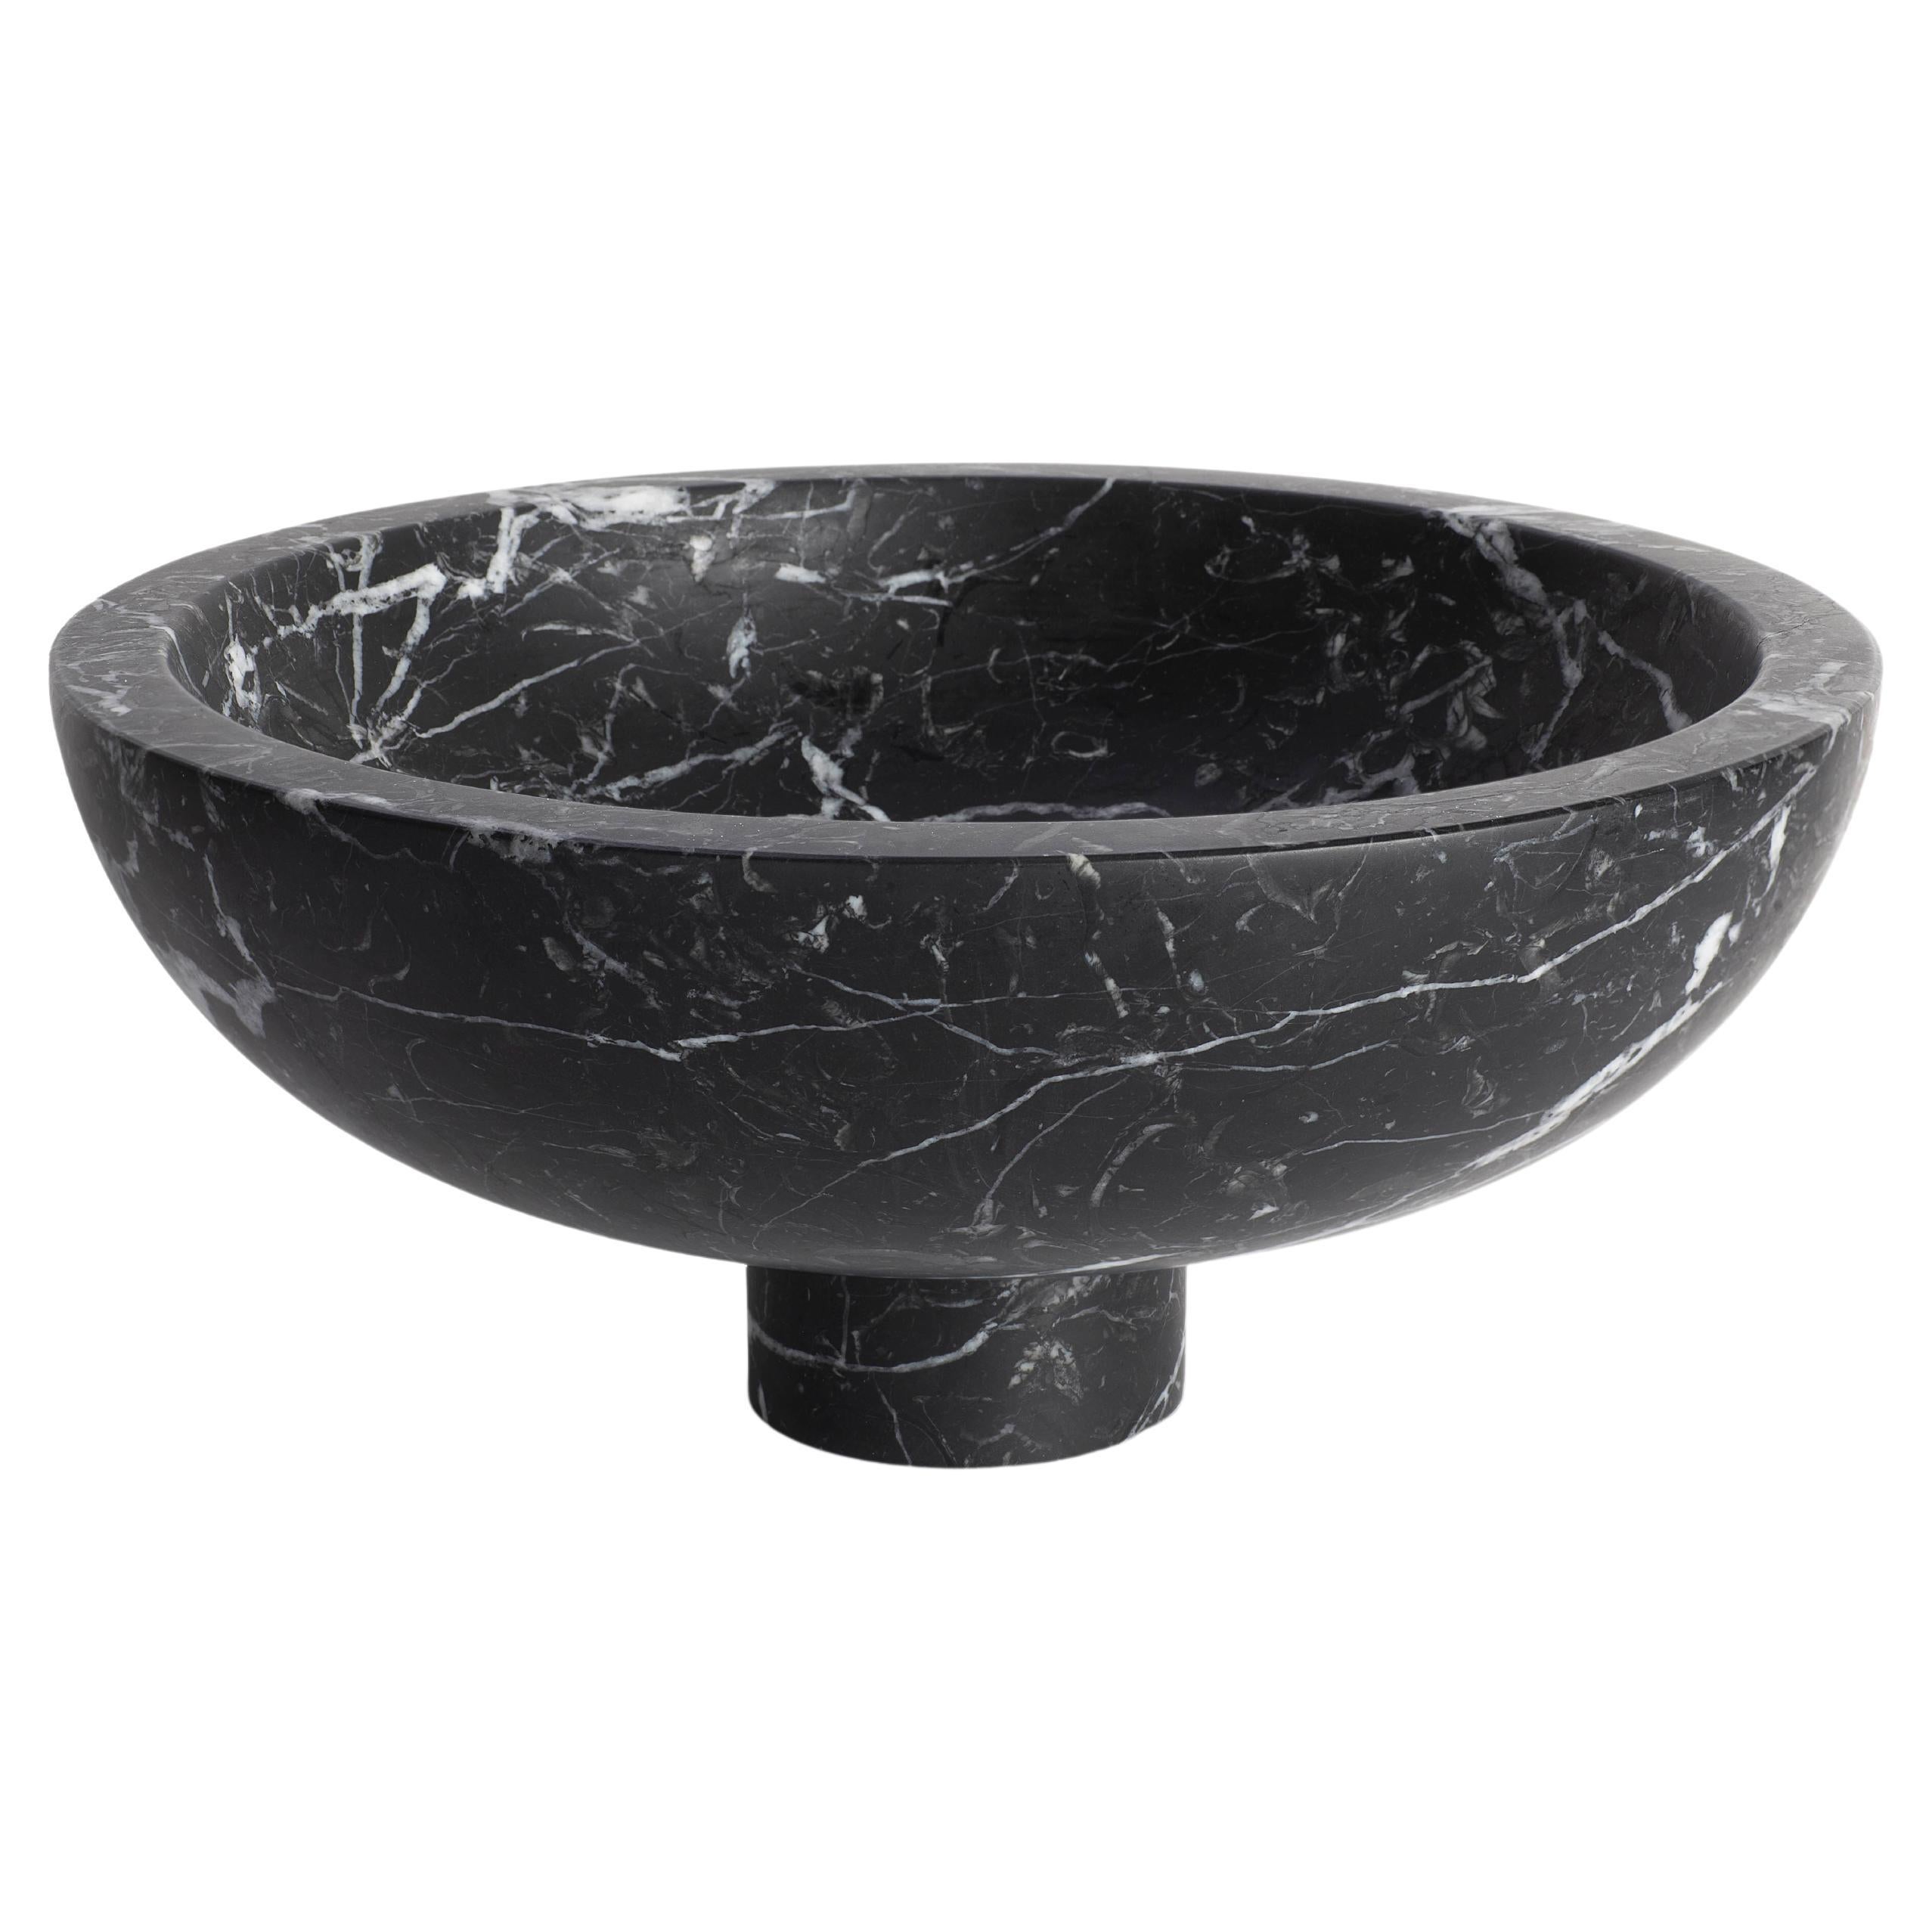 New Modern Fruit Bowl in Black Marble, Creator Karen Chekerdjian Stock